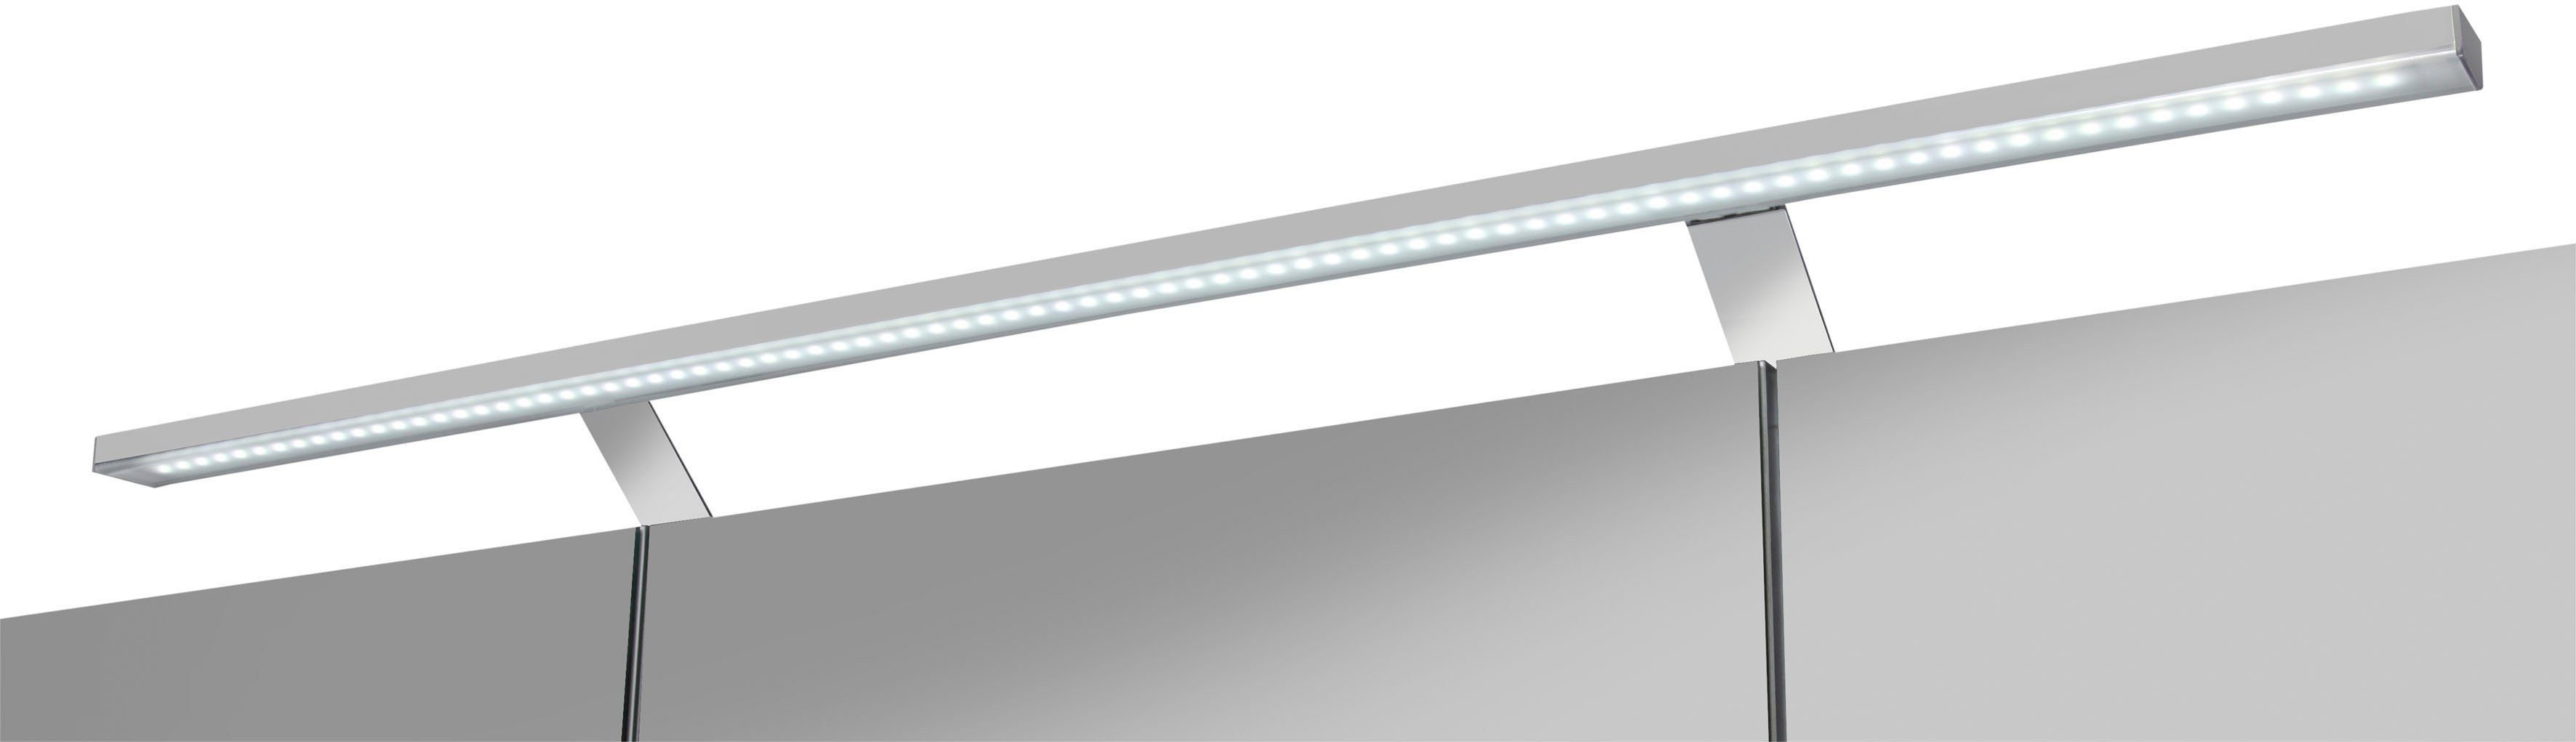 welltime Spiegelschrank Torino Breite kreideweiß 100 cm, LED-Beleuchtung, Schalter-/Steckdosenbox kreideweiß 3-türig, 